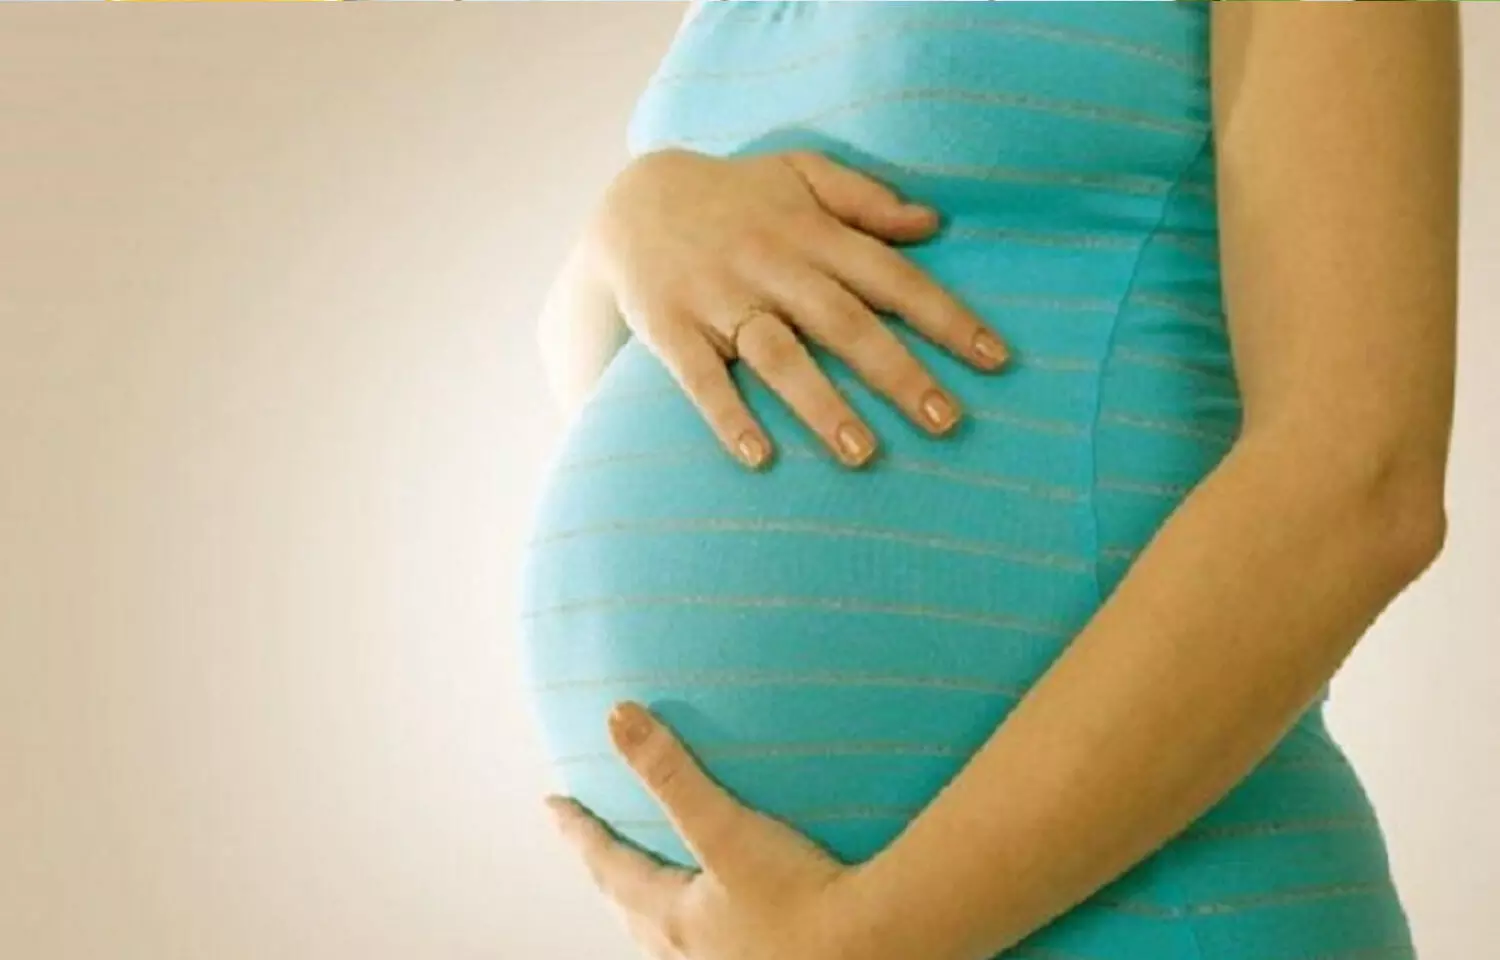 Planned cesarean births safe for low-risk pregnancies